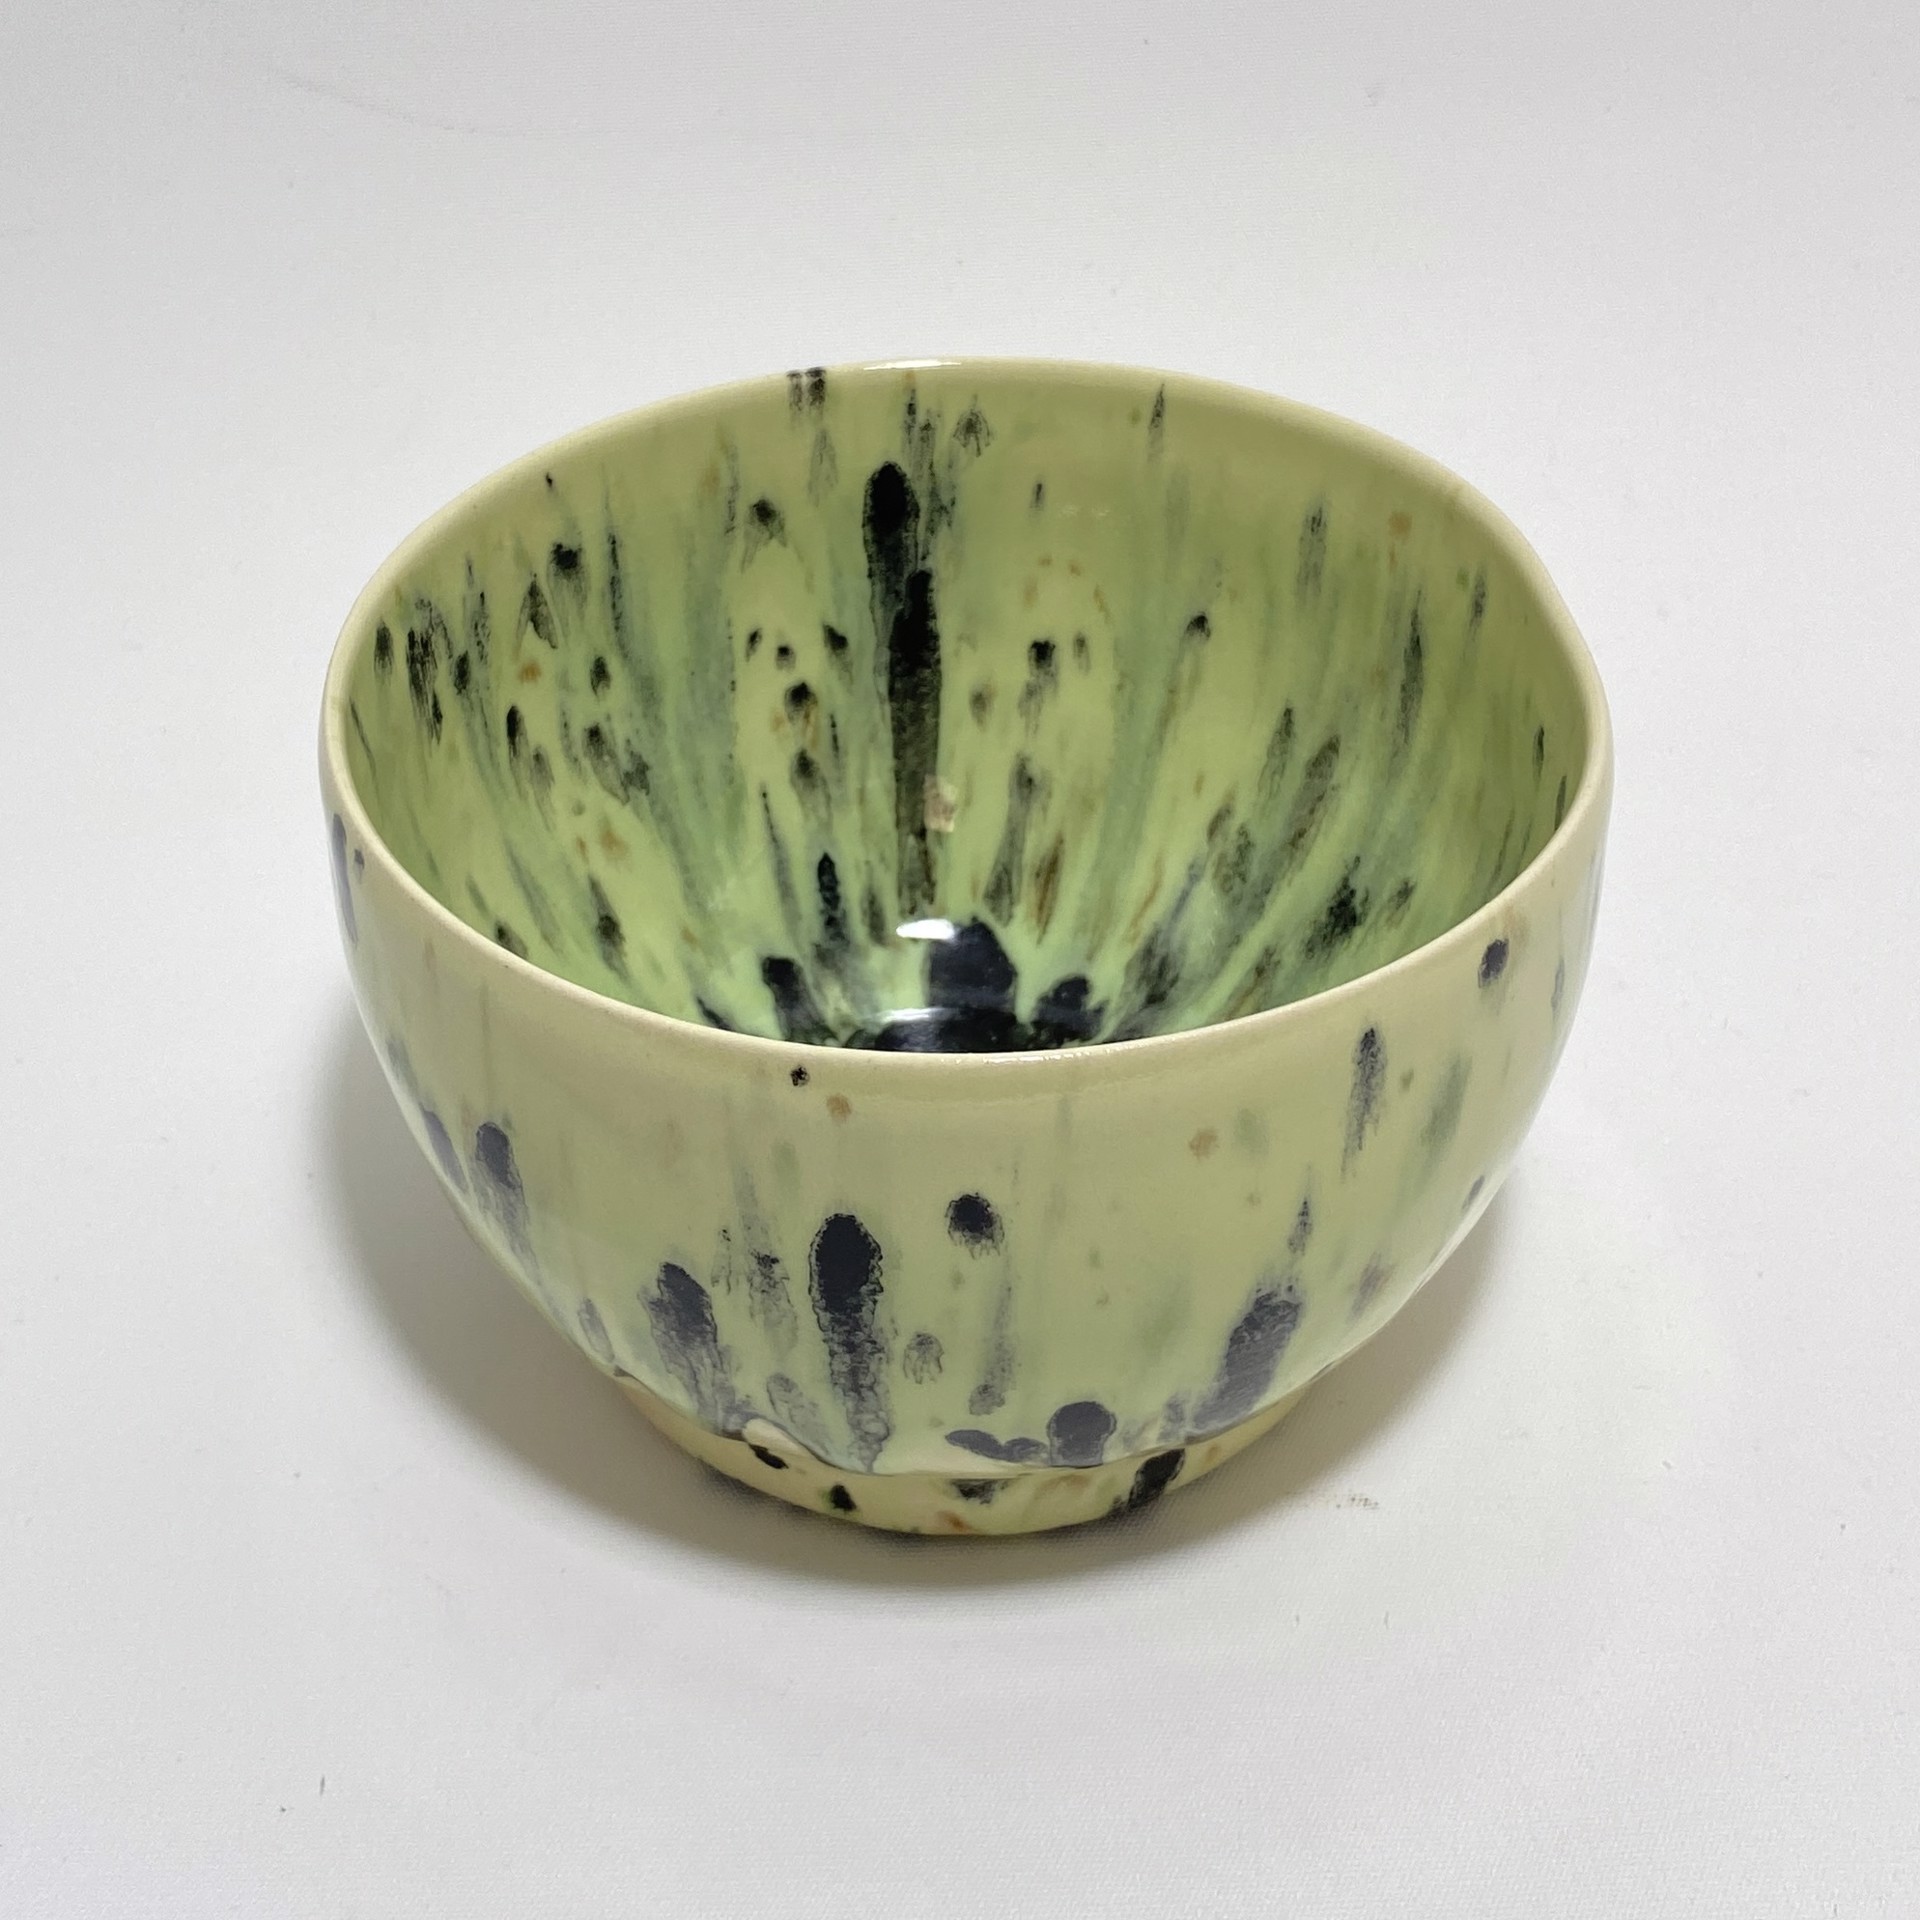 "Mint Green w/ Black Drips Bowl" by Elizabeth W. by One Step Beyond